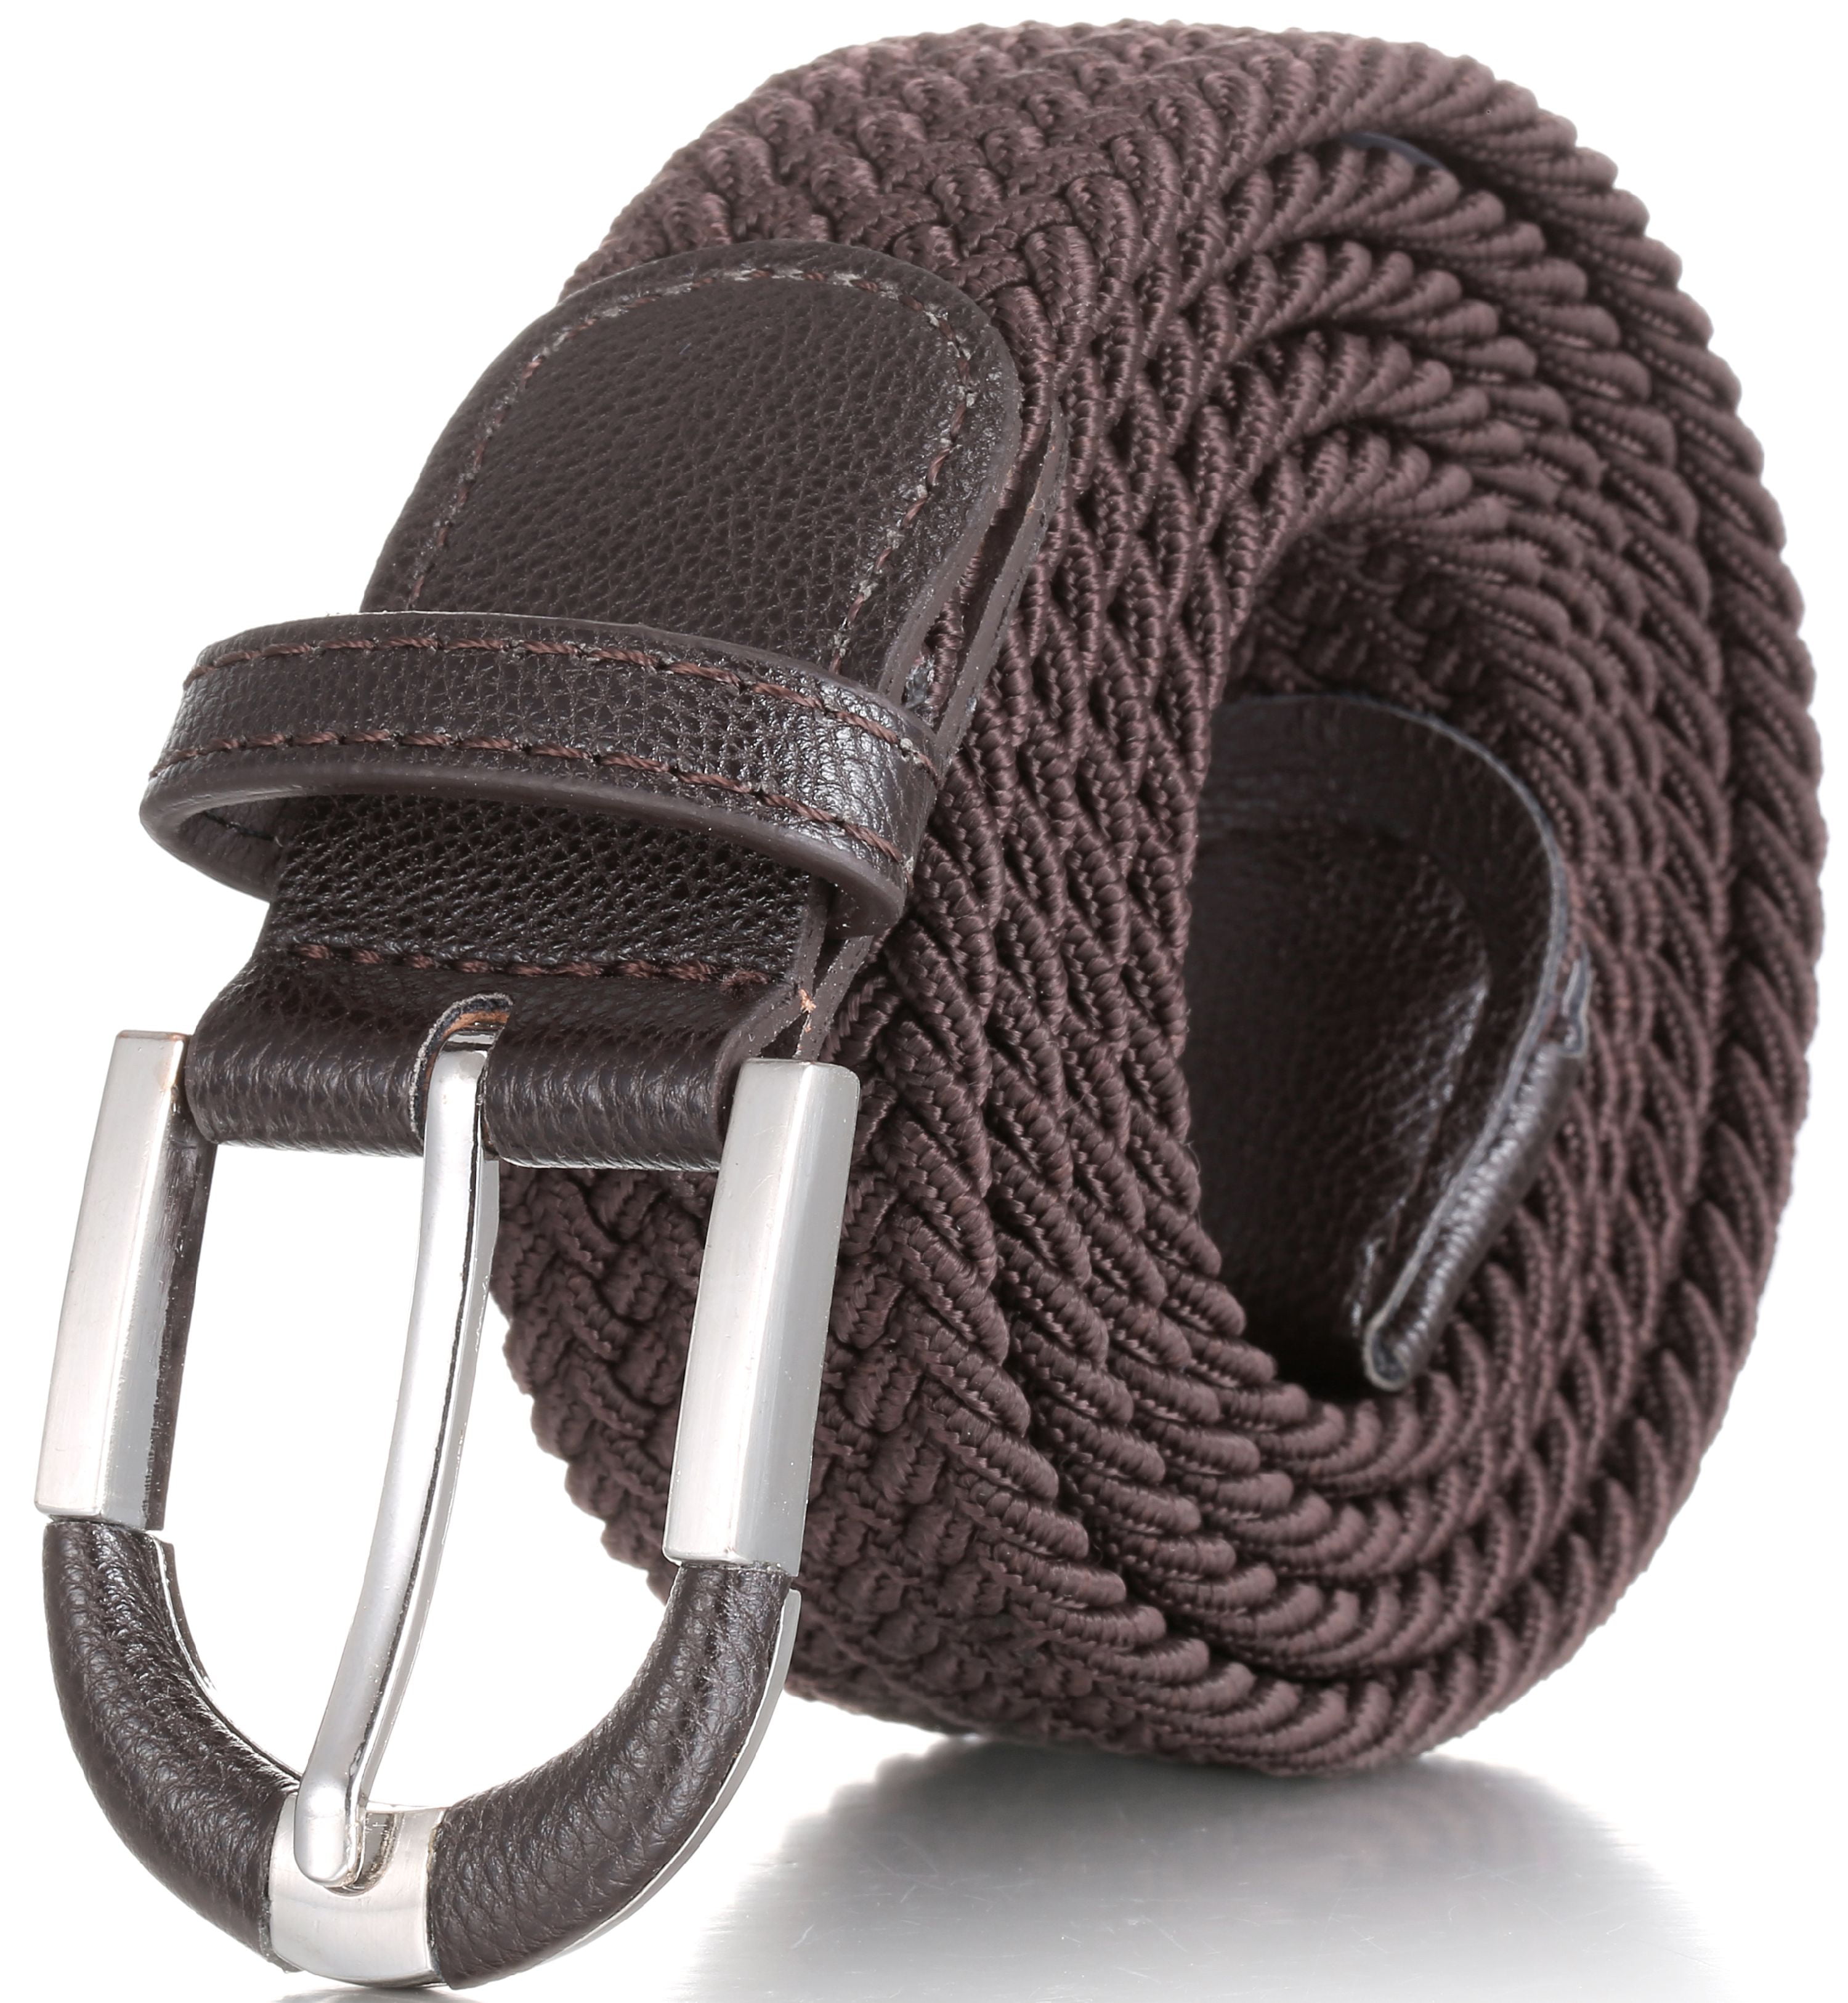 AGEA Elastic Stretch Woven Braided Waist Belt for Men and Women 